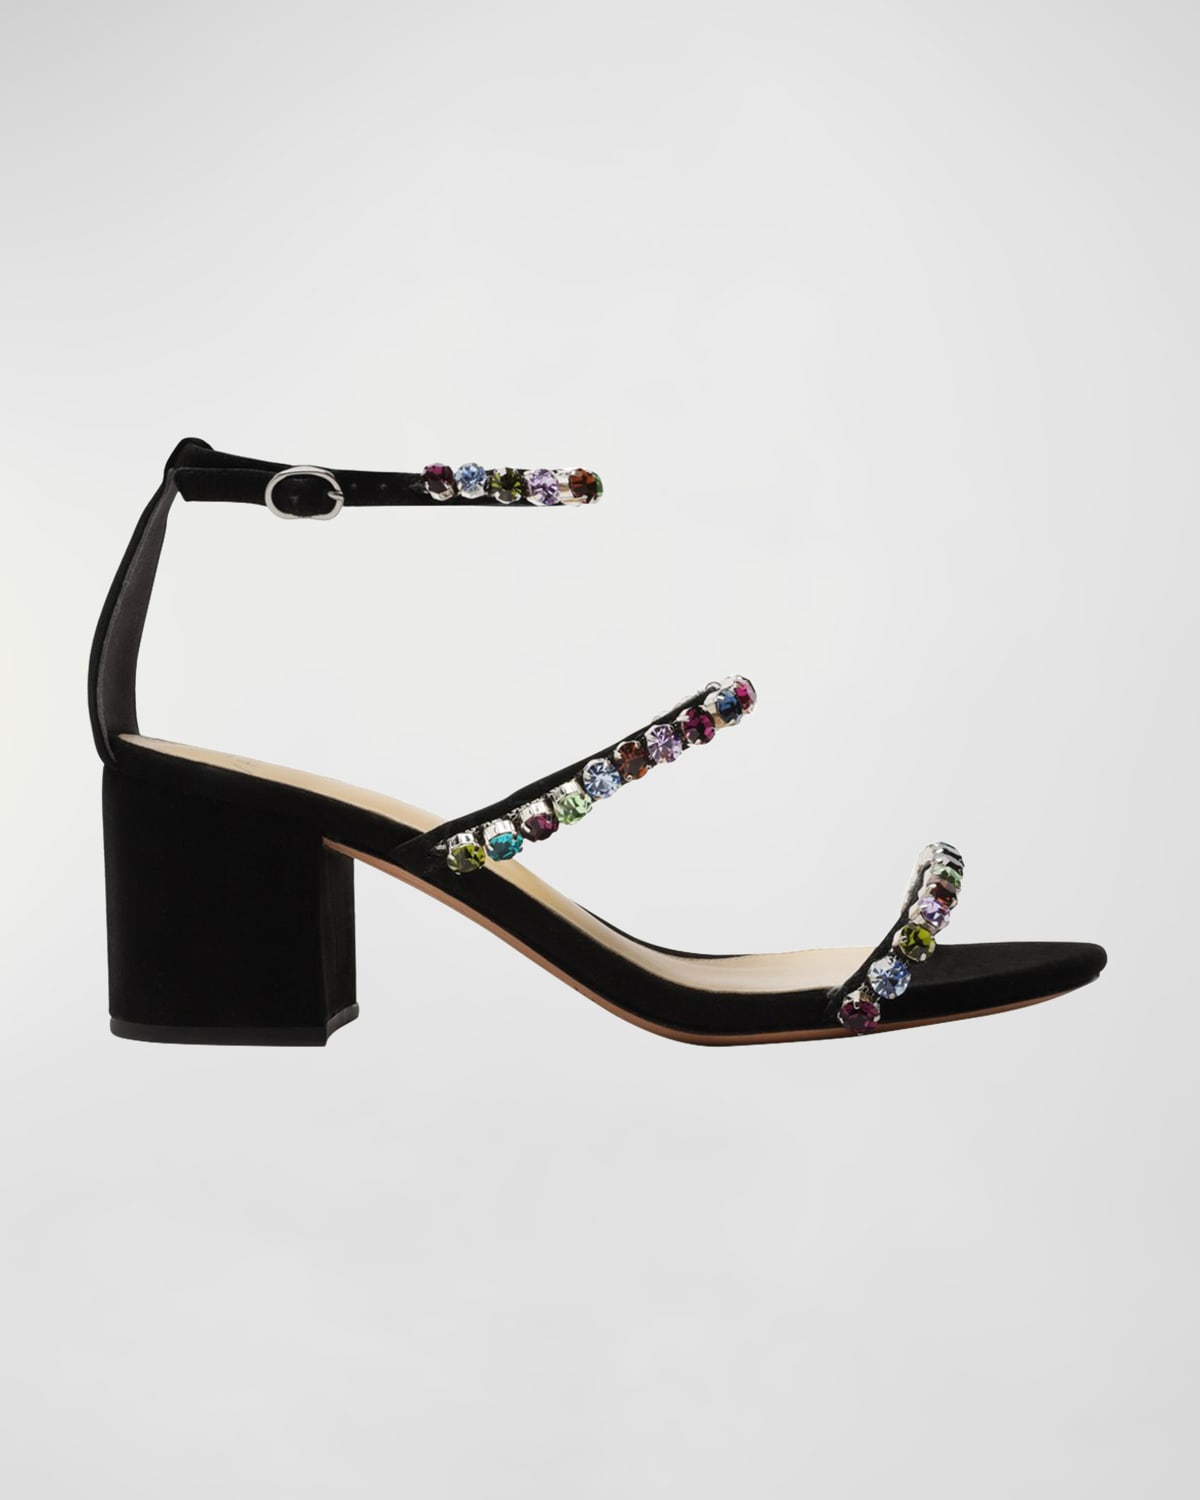 Alexa Multicolored Jewel Ankle-Strap Sandals